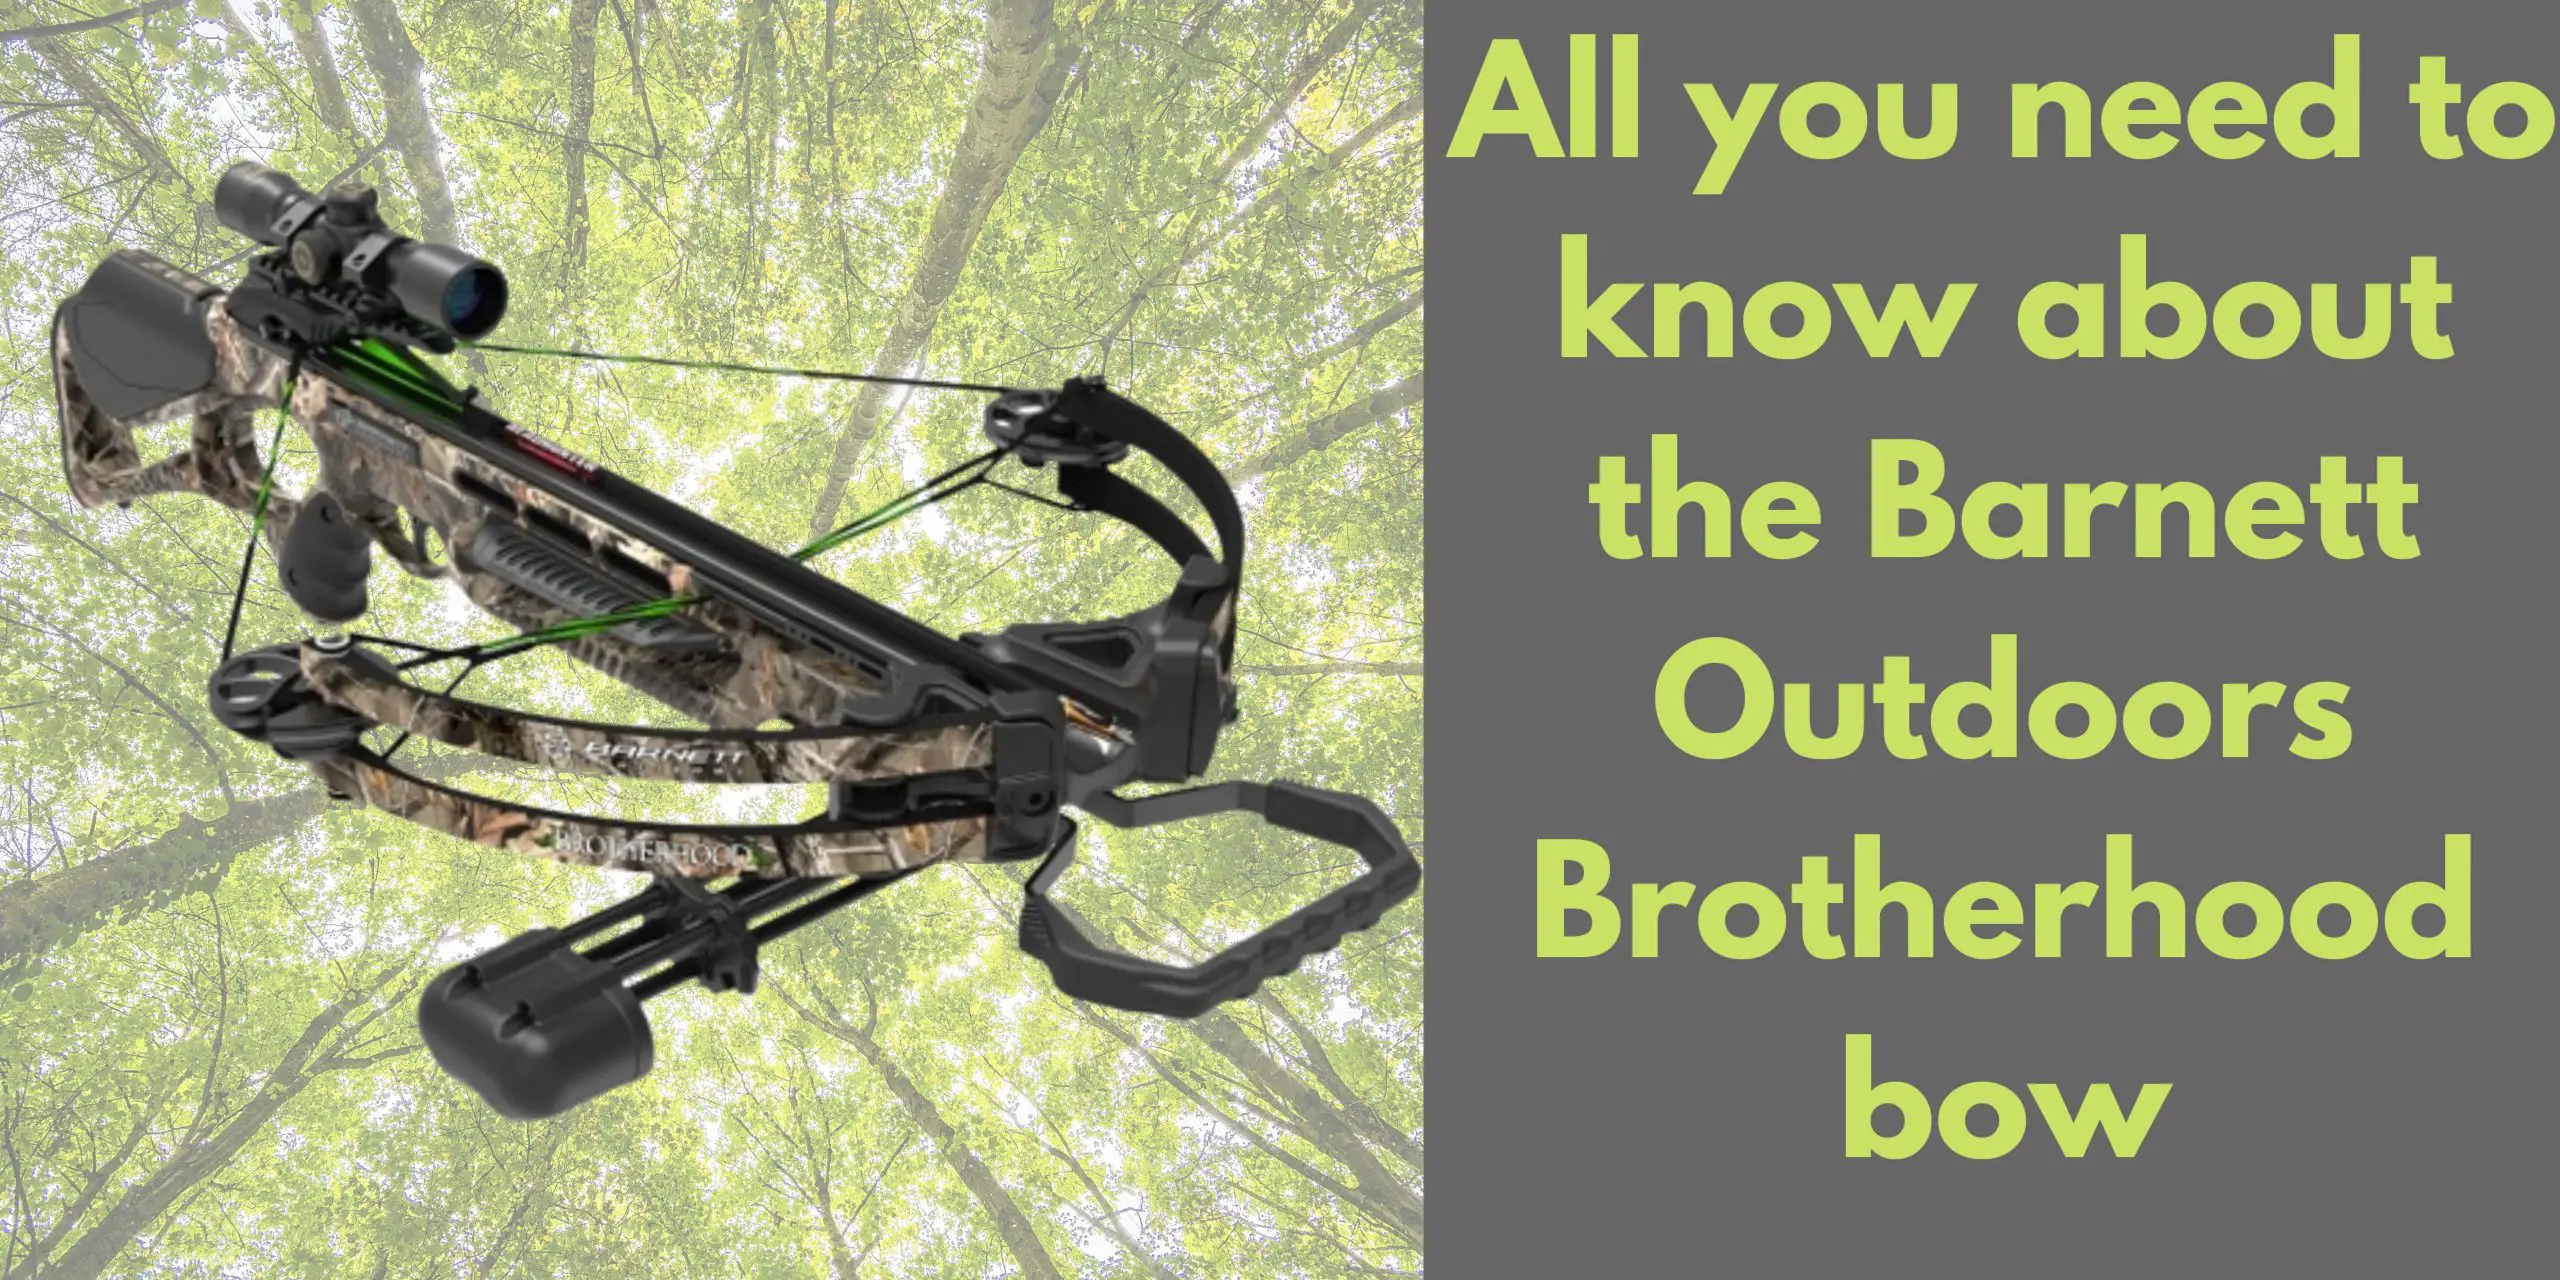 Barnett Outdoors Brotherhood bow